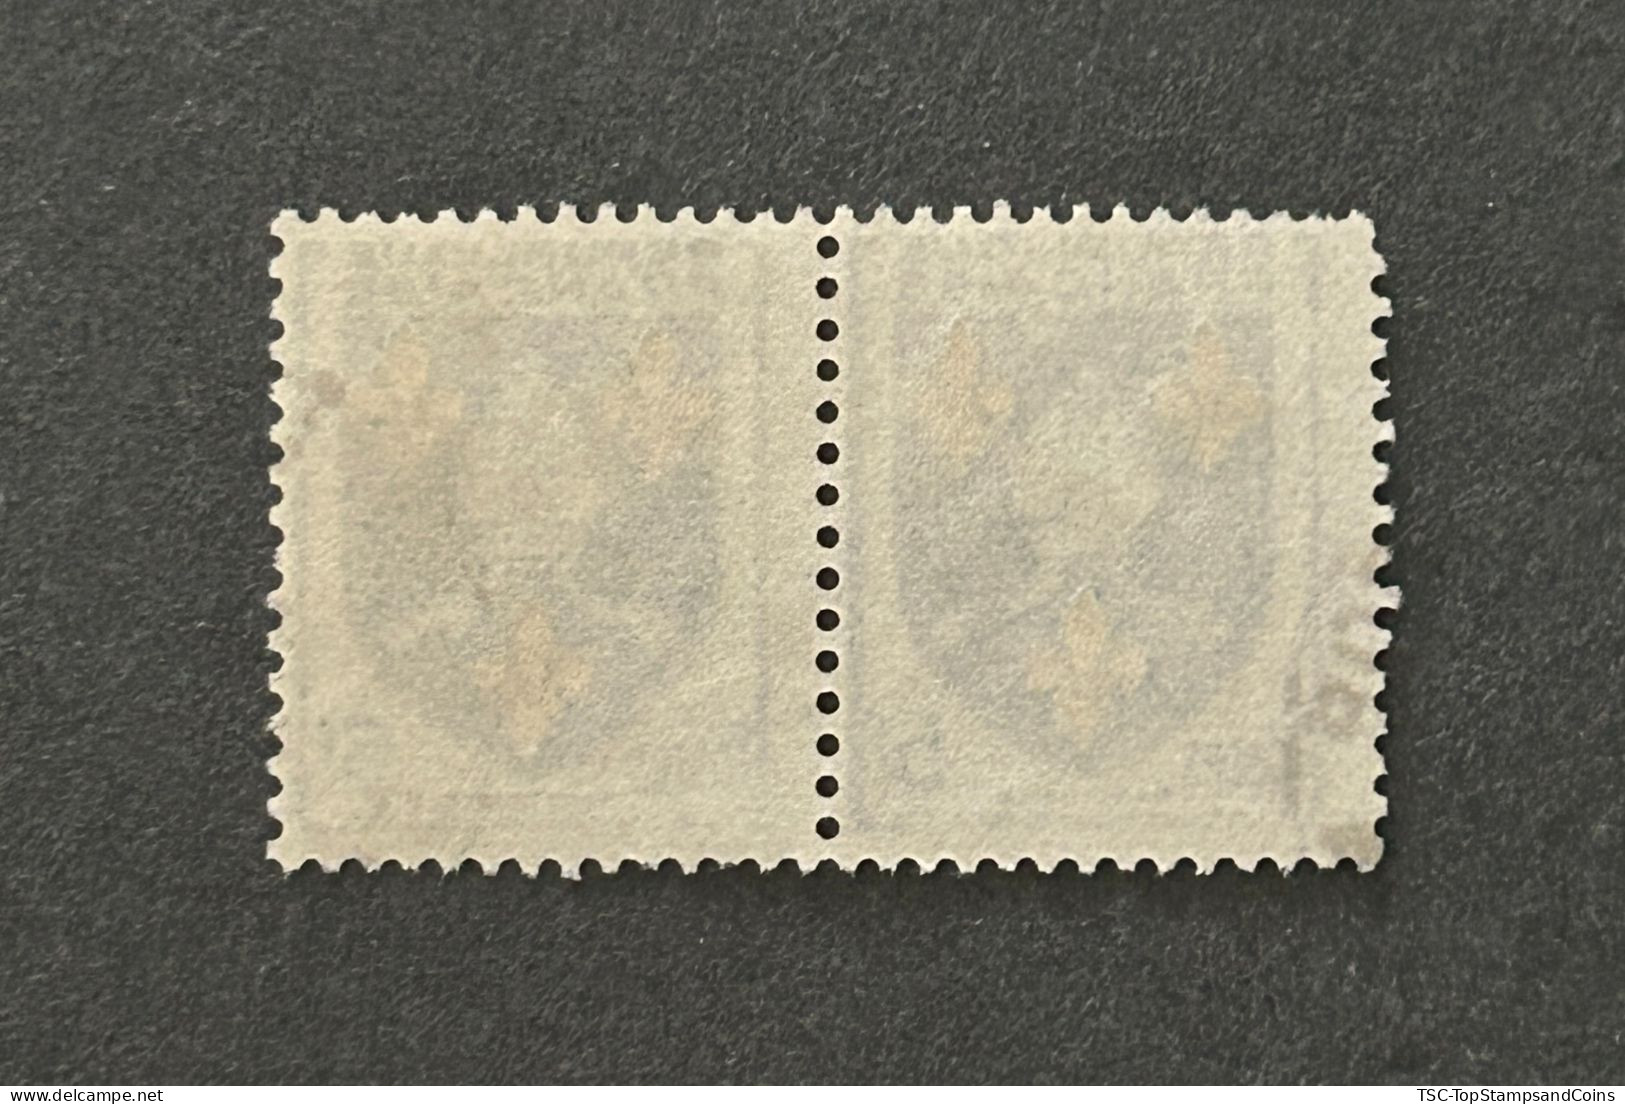 FRA1005Ux2h3 - Armoiries De Provinces (VII) - Saintonge - Pair Of 5 F Used Stamps - 1954 - France YT 1005 - 1941-66 Escudos Y Blasones